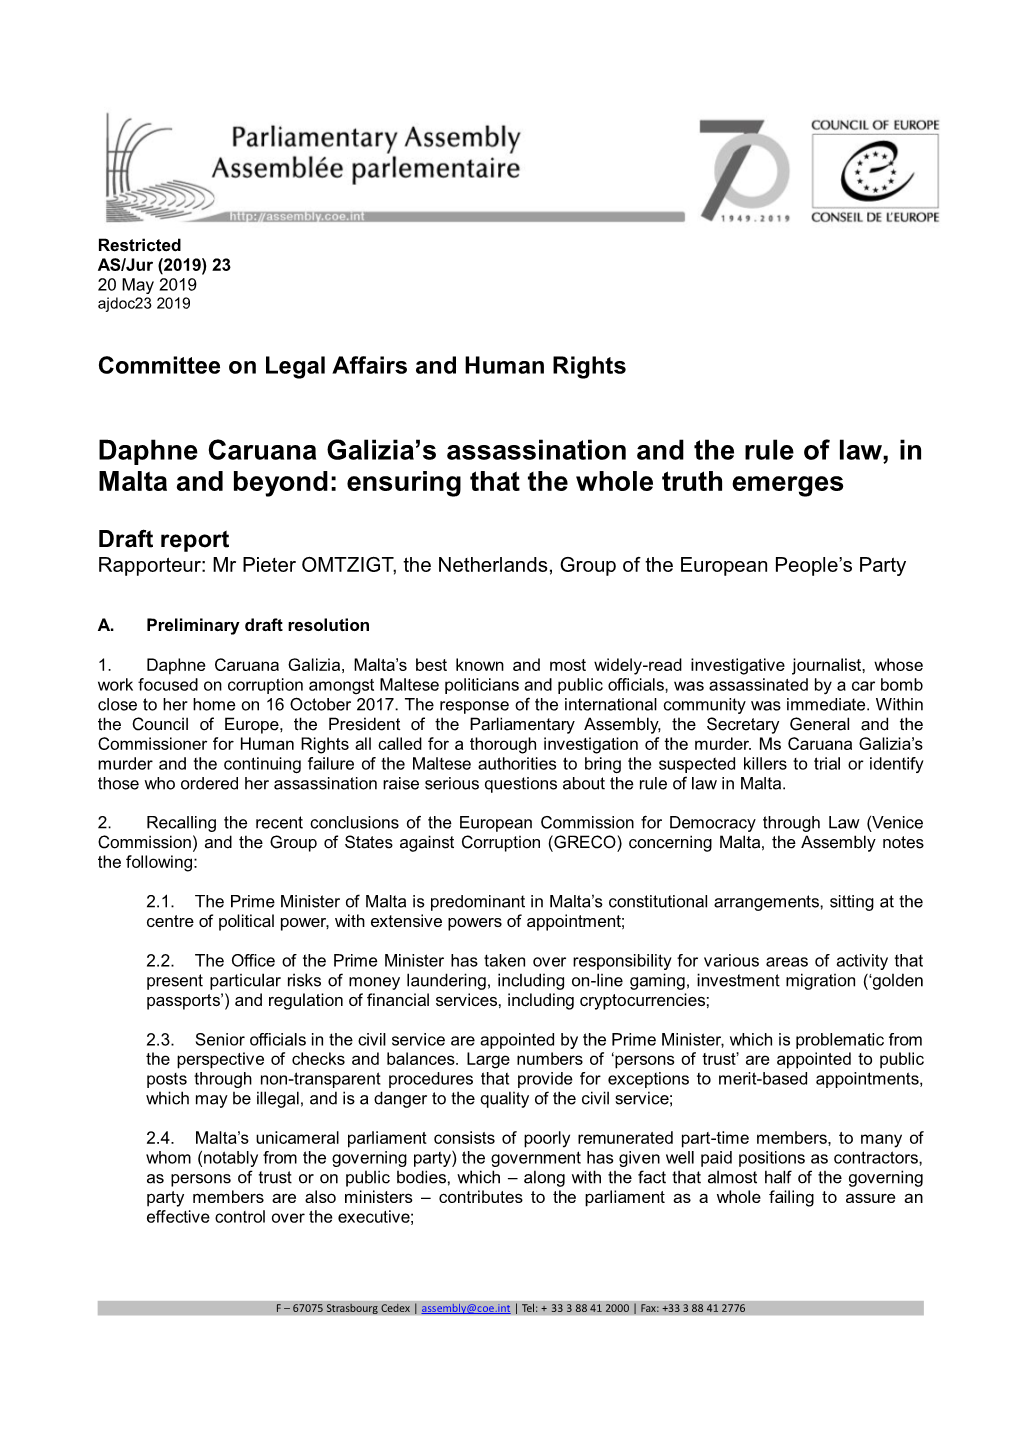 Daphne Caruana Galizia's Assassination and The